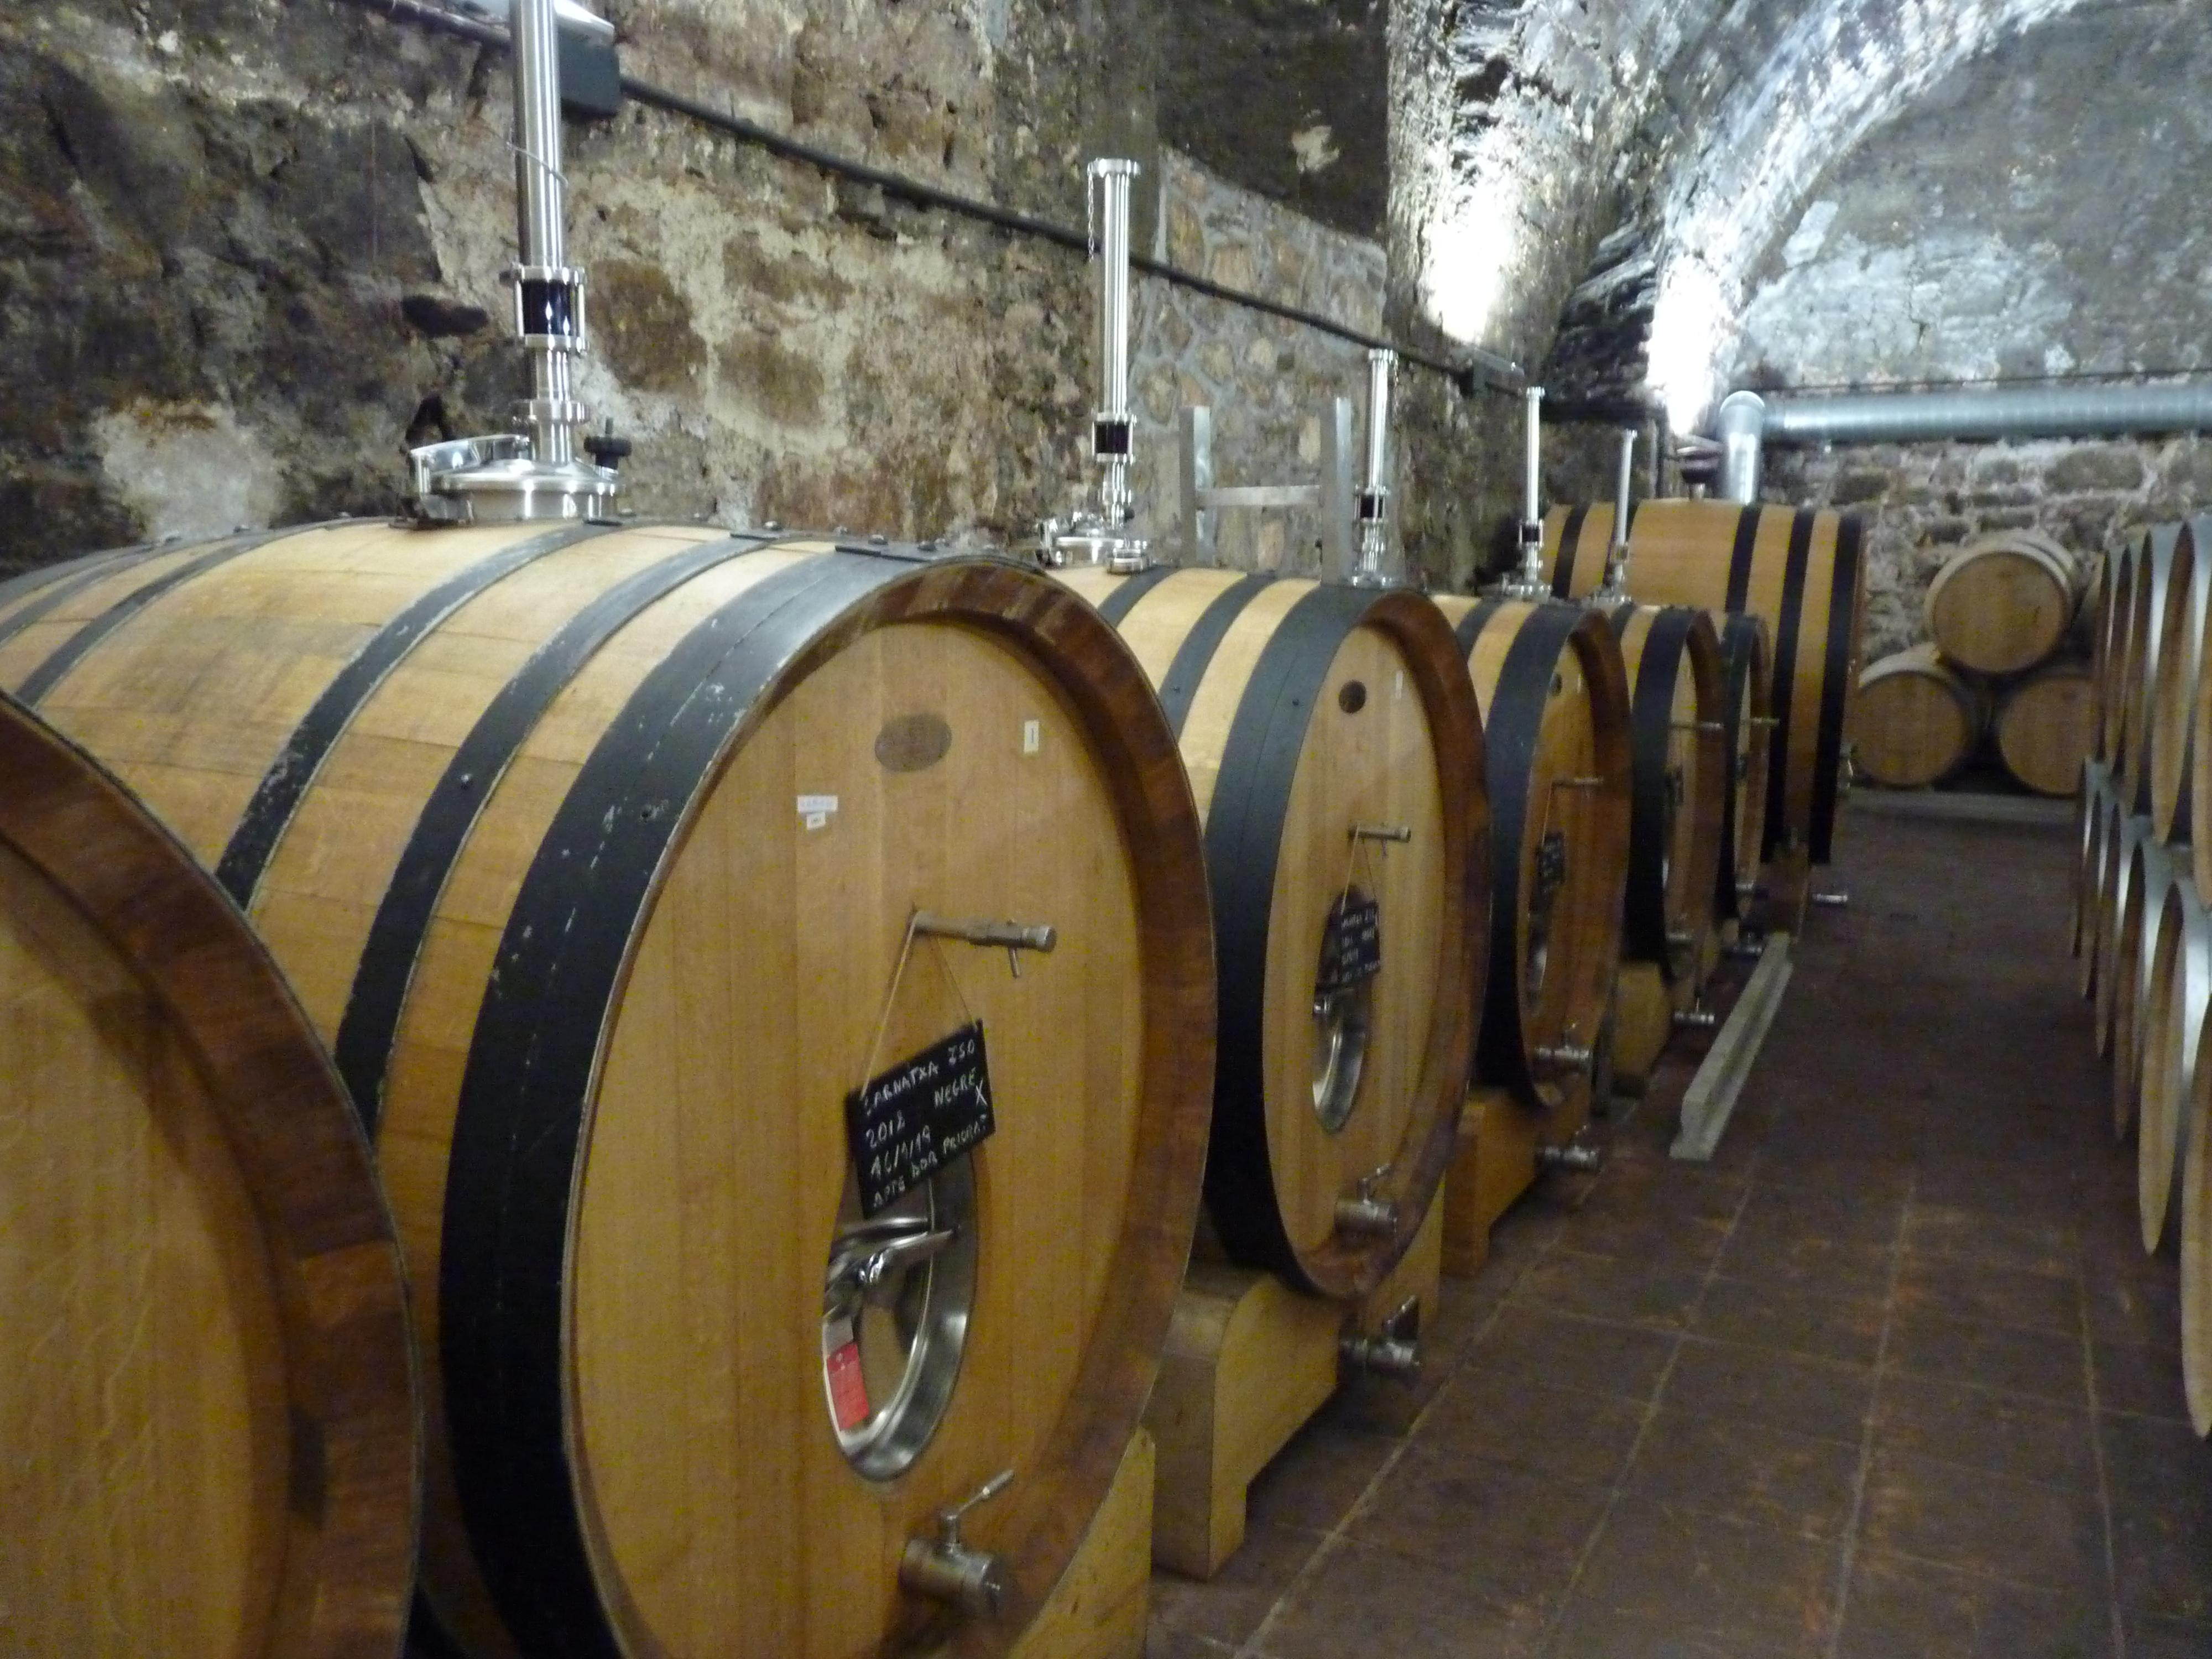 Scala Dei Monastery winery circa 1690